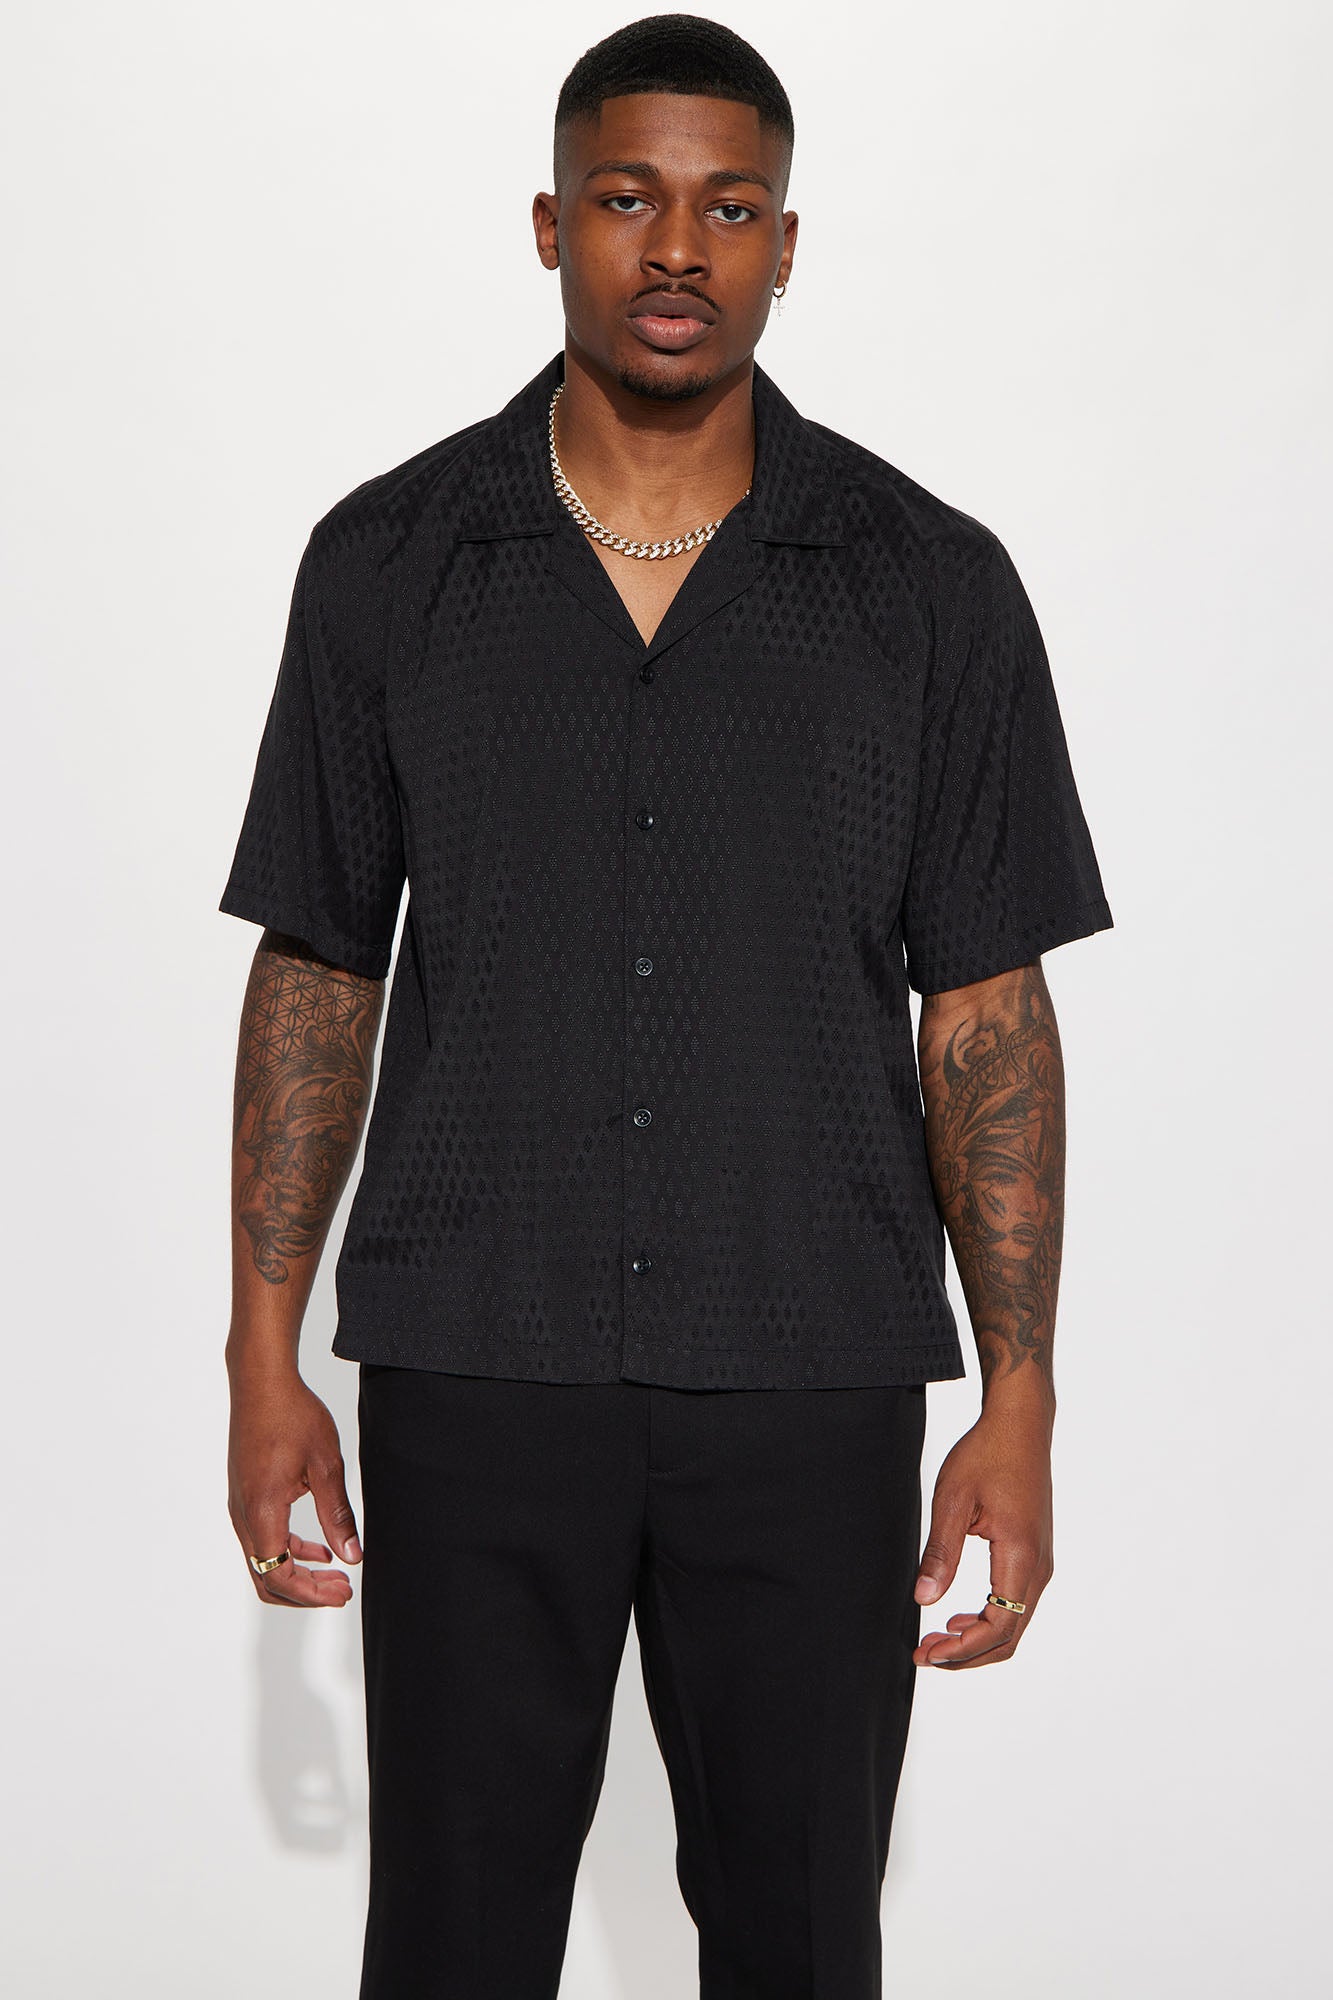 Icy Jacquard Short Sleeve Button Up Shirt - Black